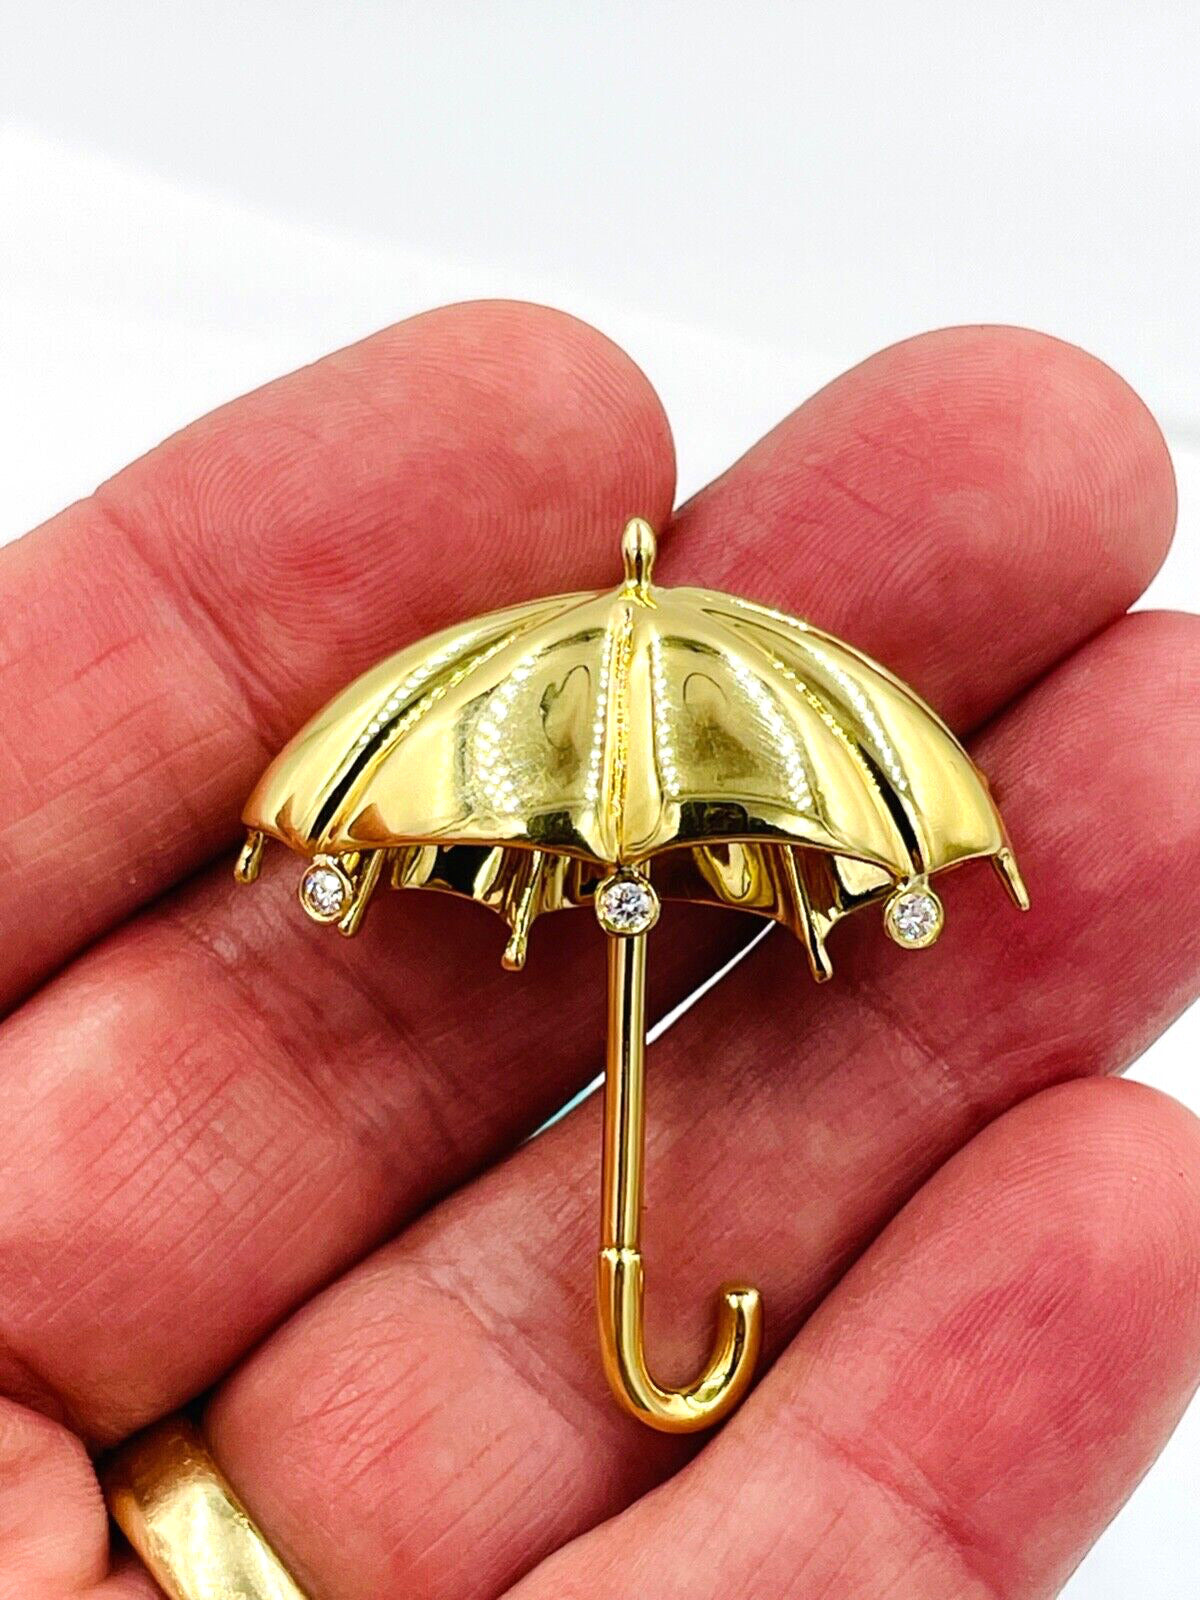 Tiffany & Co Large Diamond Umbrella Brooch Pin in 18K Yellow Gold